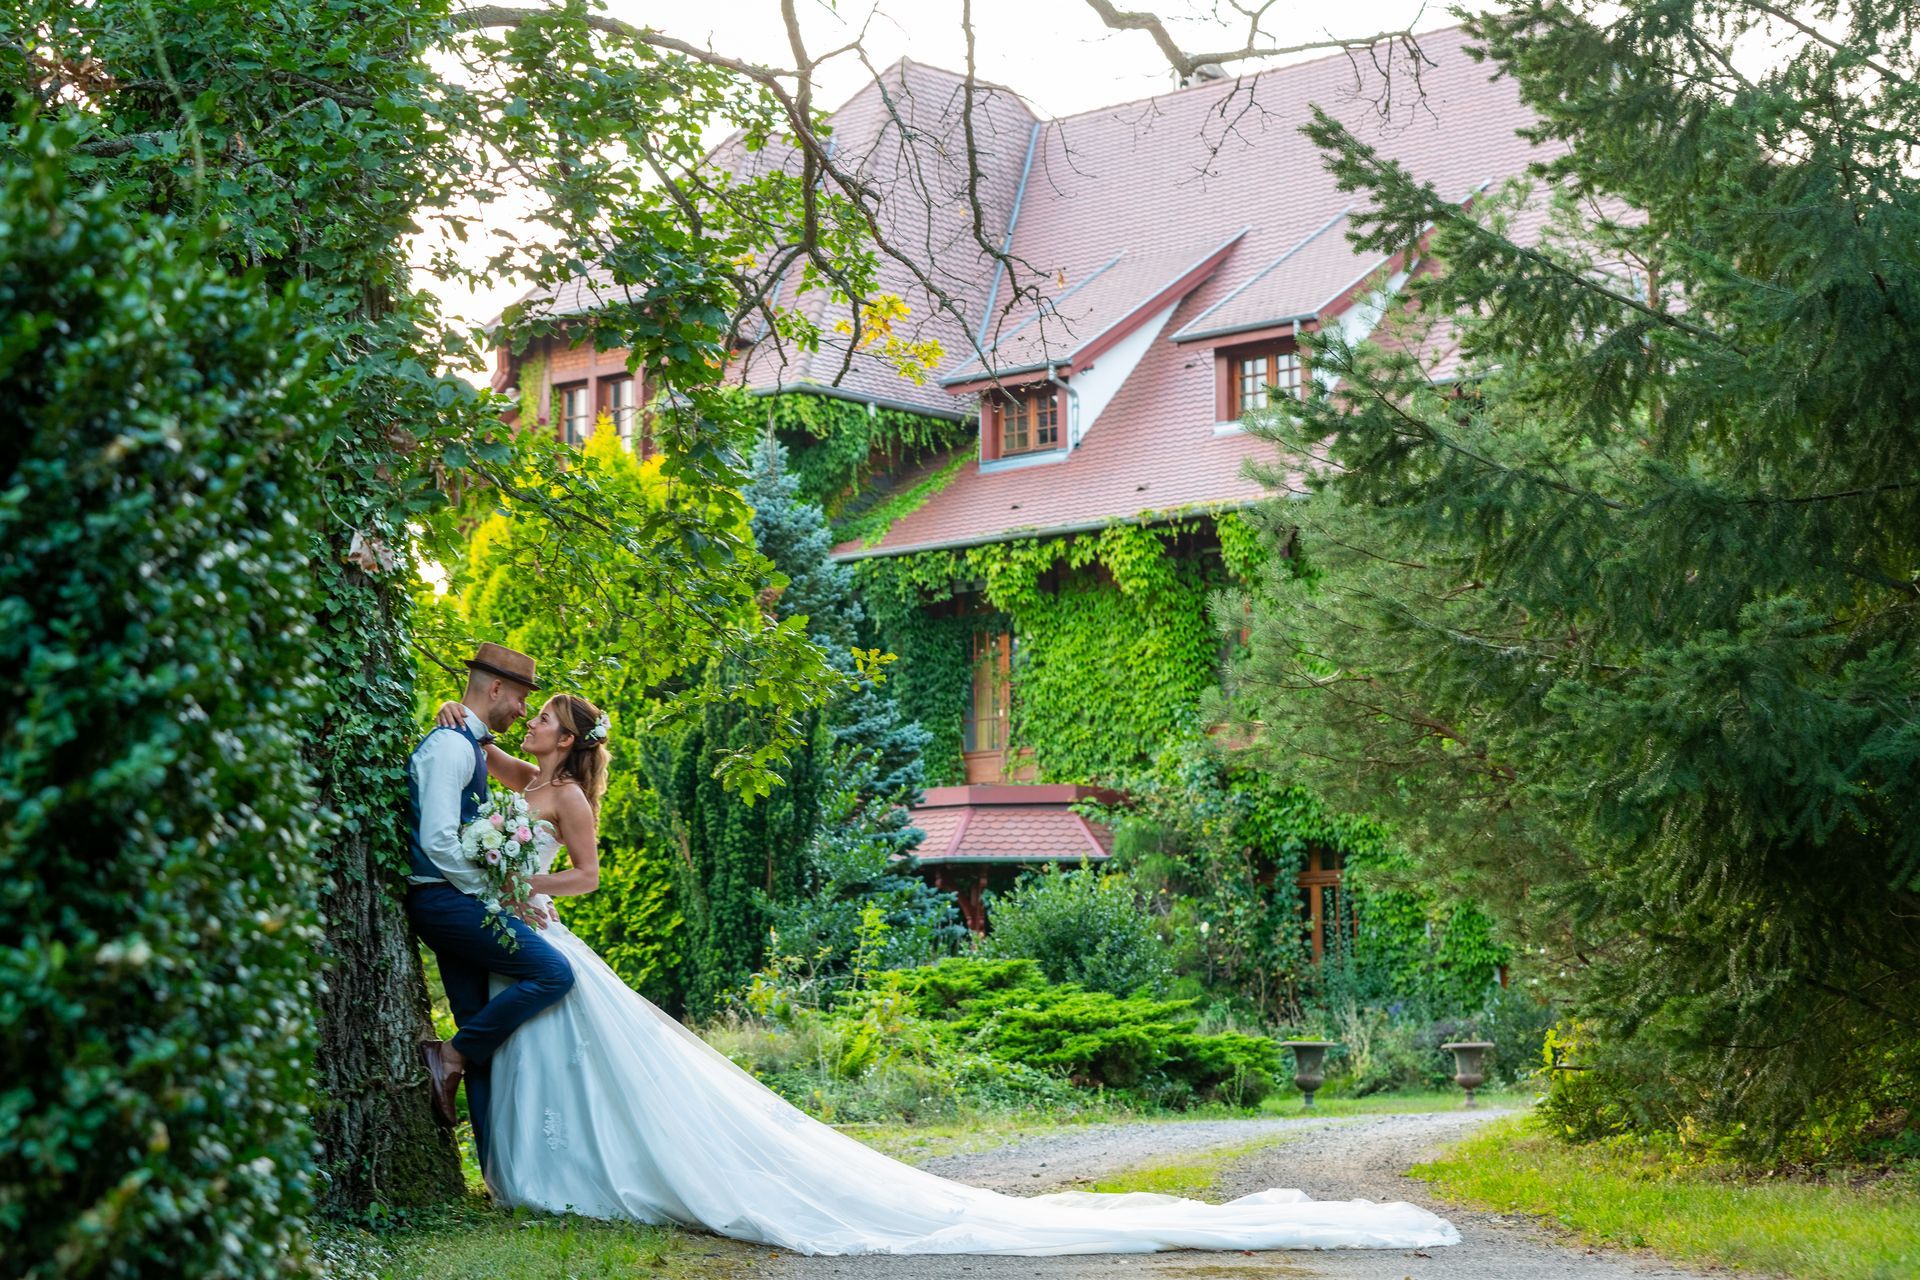 Photographe de mariage Urmatt - Photographe de mariage Obernai - Photographe de mariage Dorlisheim - Photographe Schirmeck - Sauvage Raphael